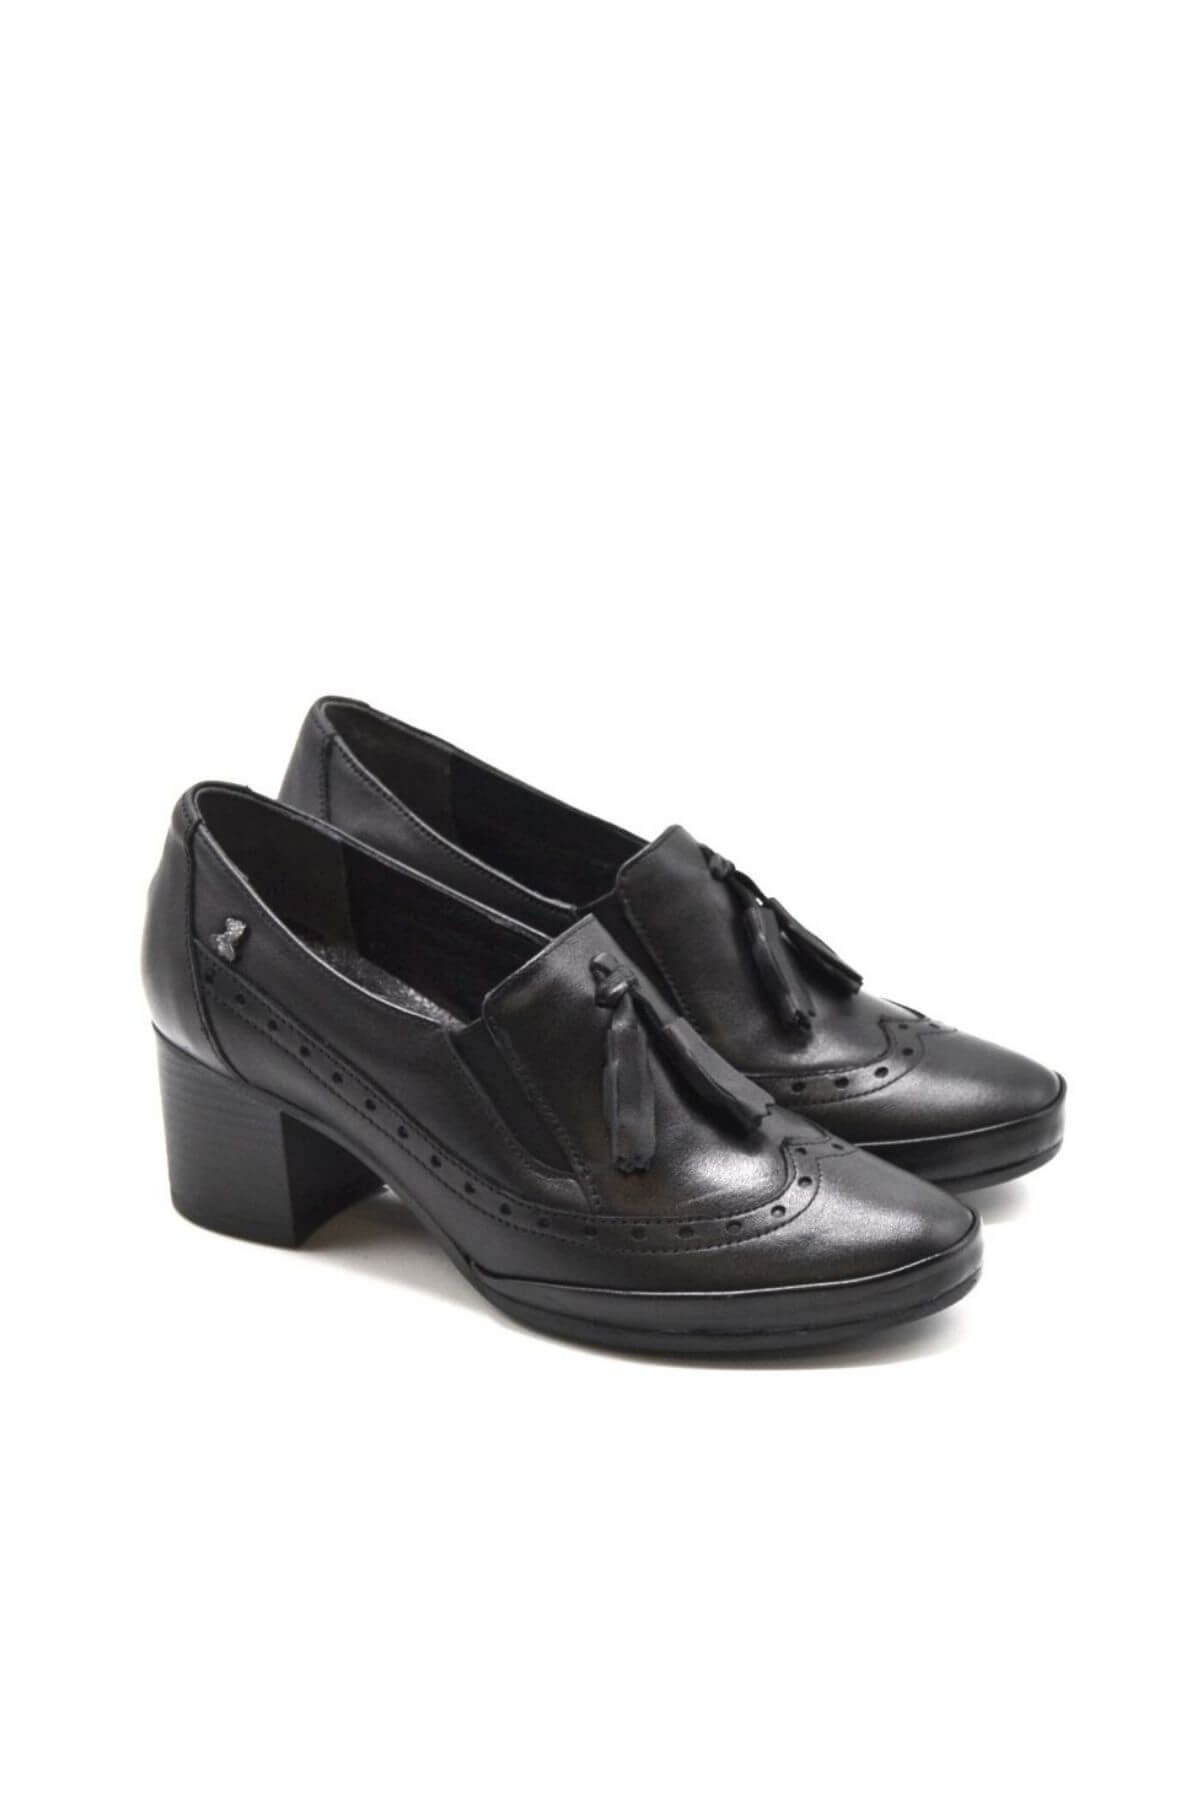 Kadın Topuklu Deri Ayakkabı Siyah 1911943K - Thumbnail